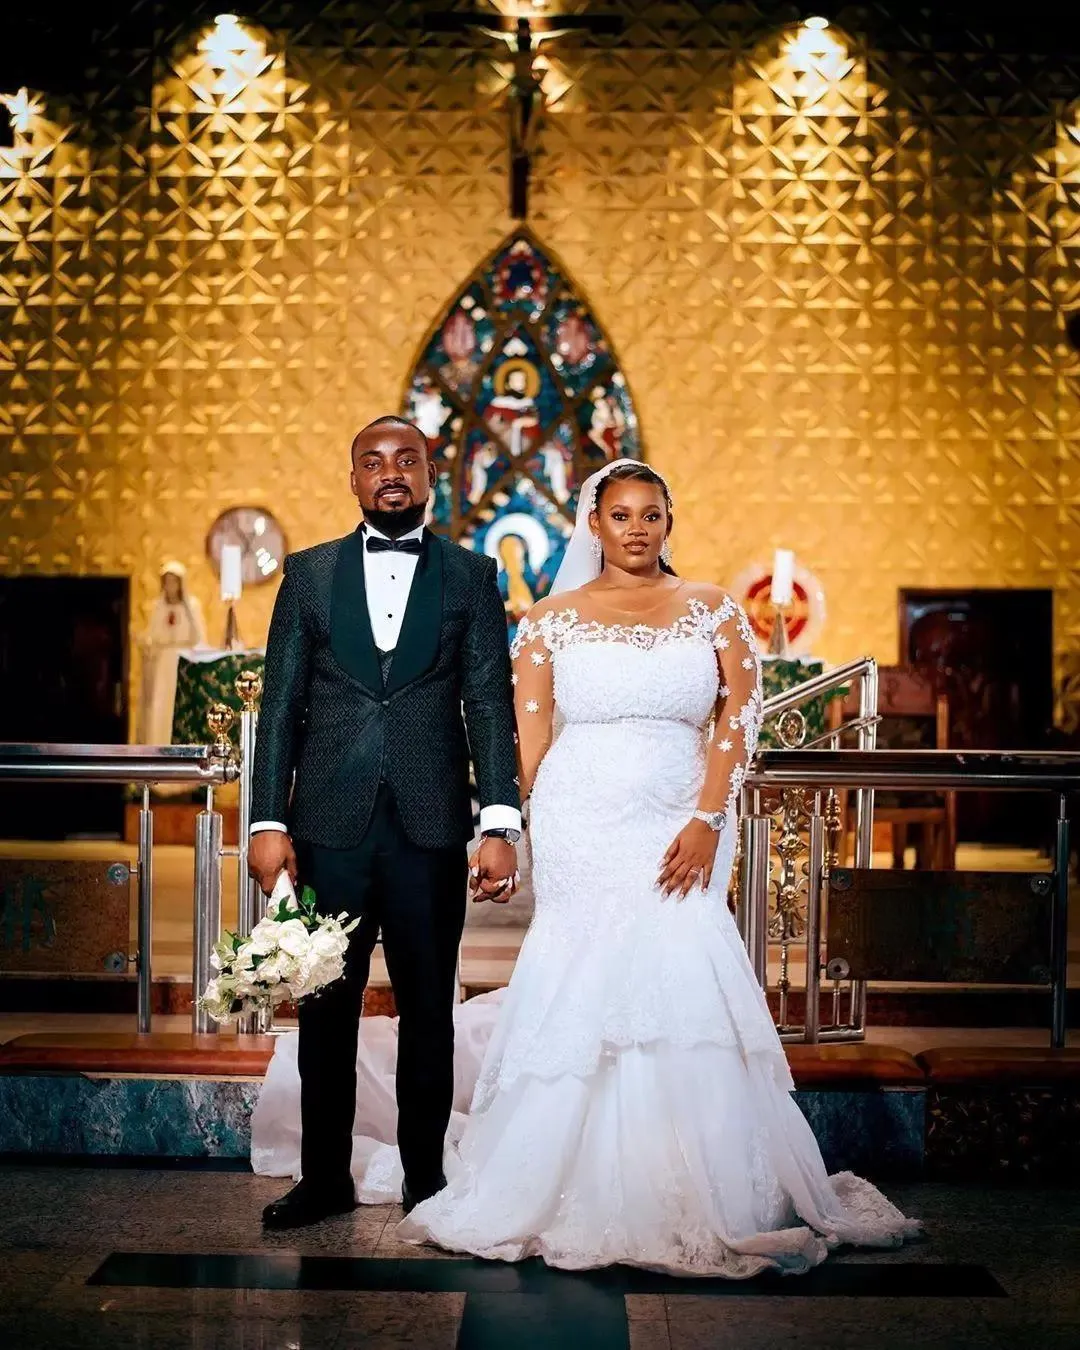 2022 African Plus Size Wedding Dresses Mermaid Bridal Gown Scoop Neck Long Sleeves Crystals Lace Applique Custom Made Sweep Train Vestido de novia